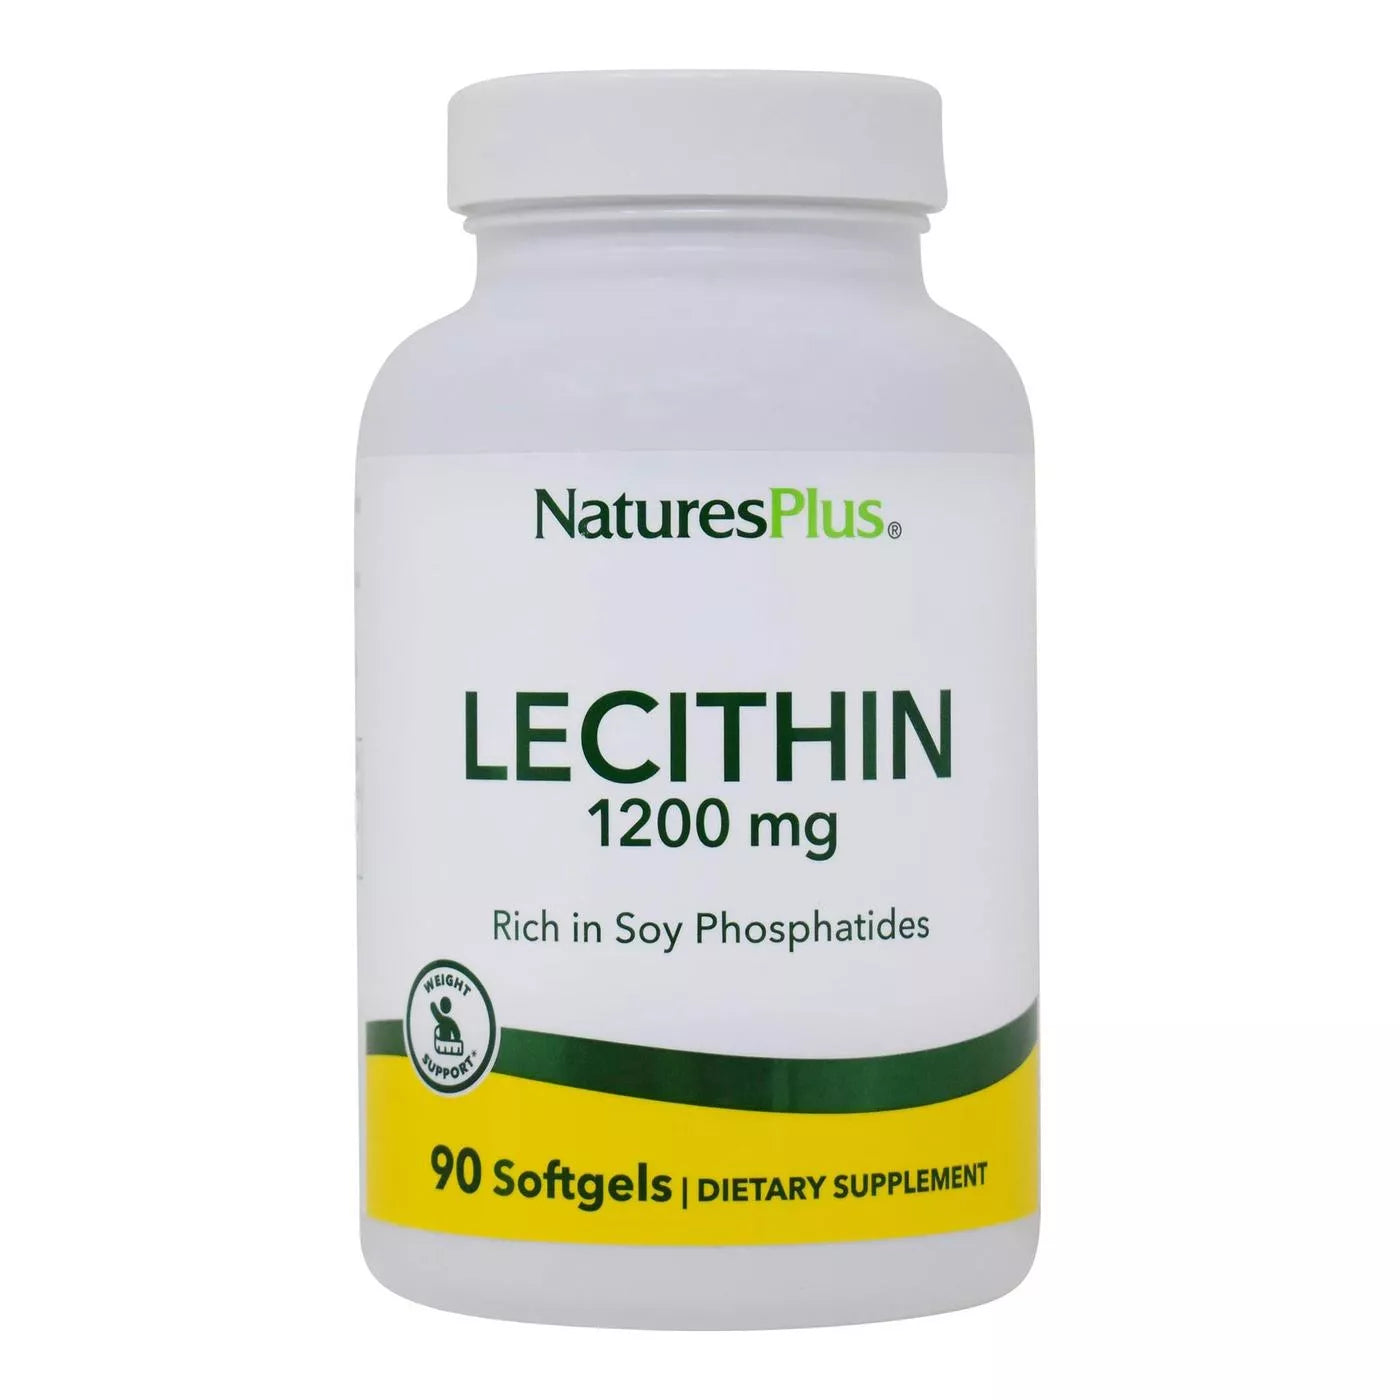 NaturesPlus Lecithin 1200 mg | 90 Softgels Caps